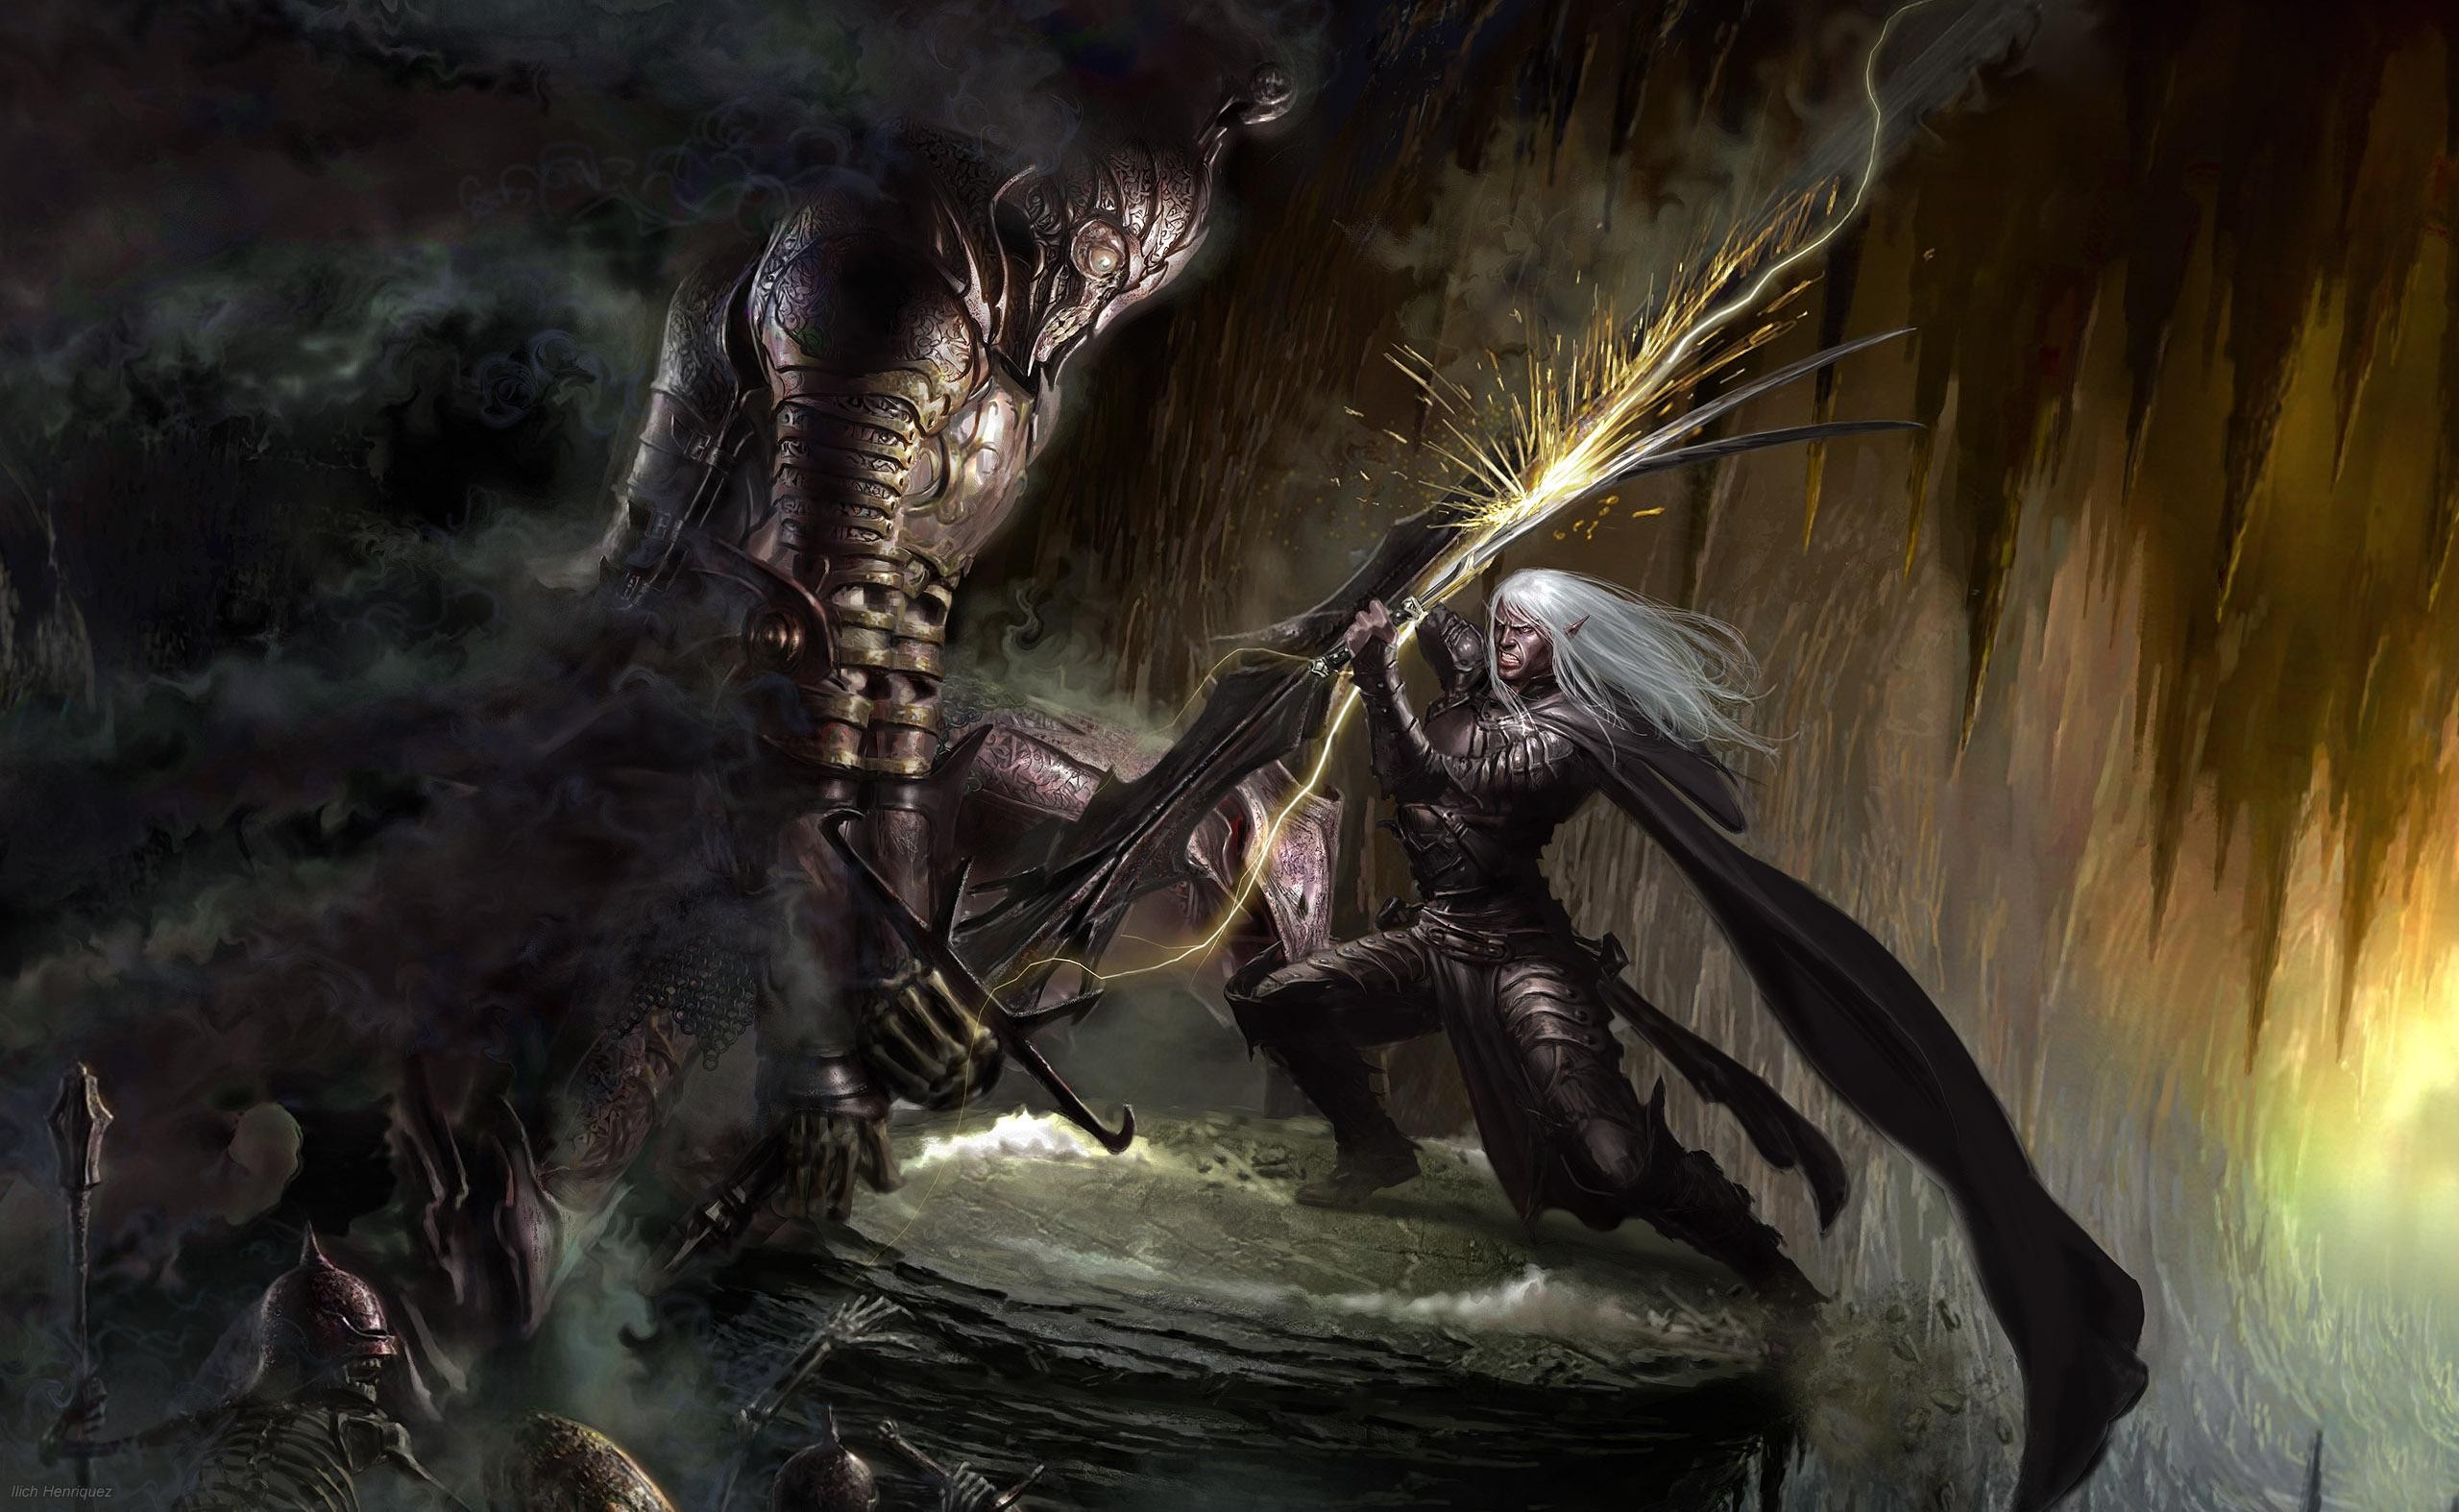 General 2560x1574 fantasy art artwork Dungeons & Dragons Drizzt Do'Urden armor battle fantasy men fantasy armor